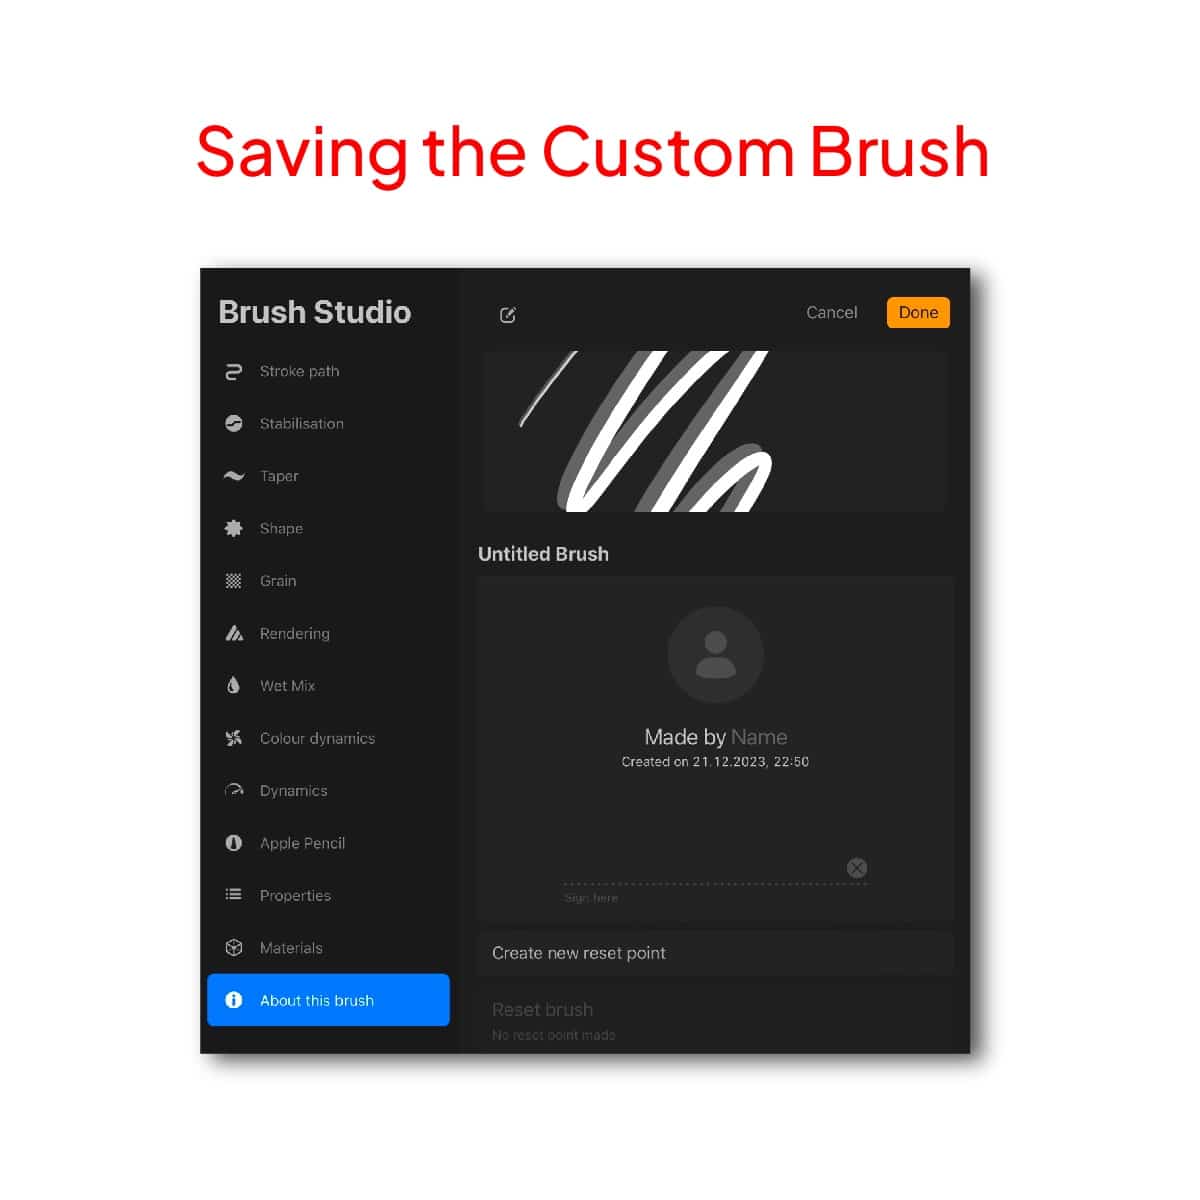 Saving the custom brush